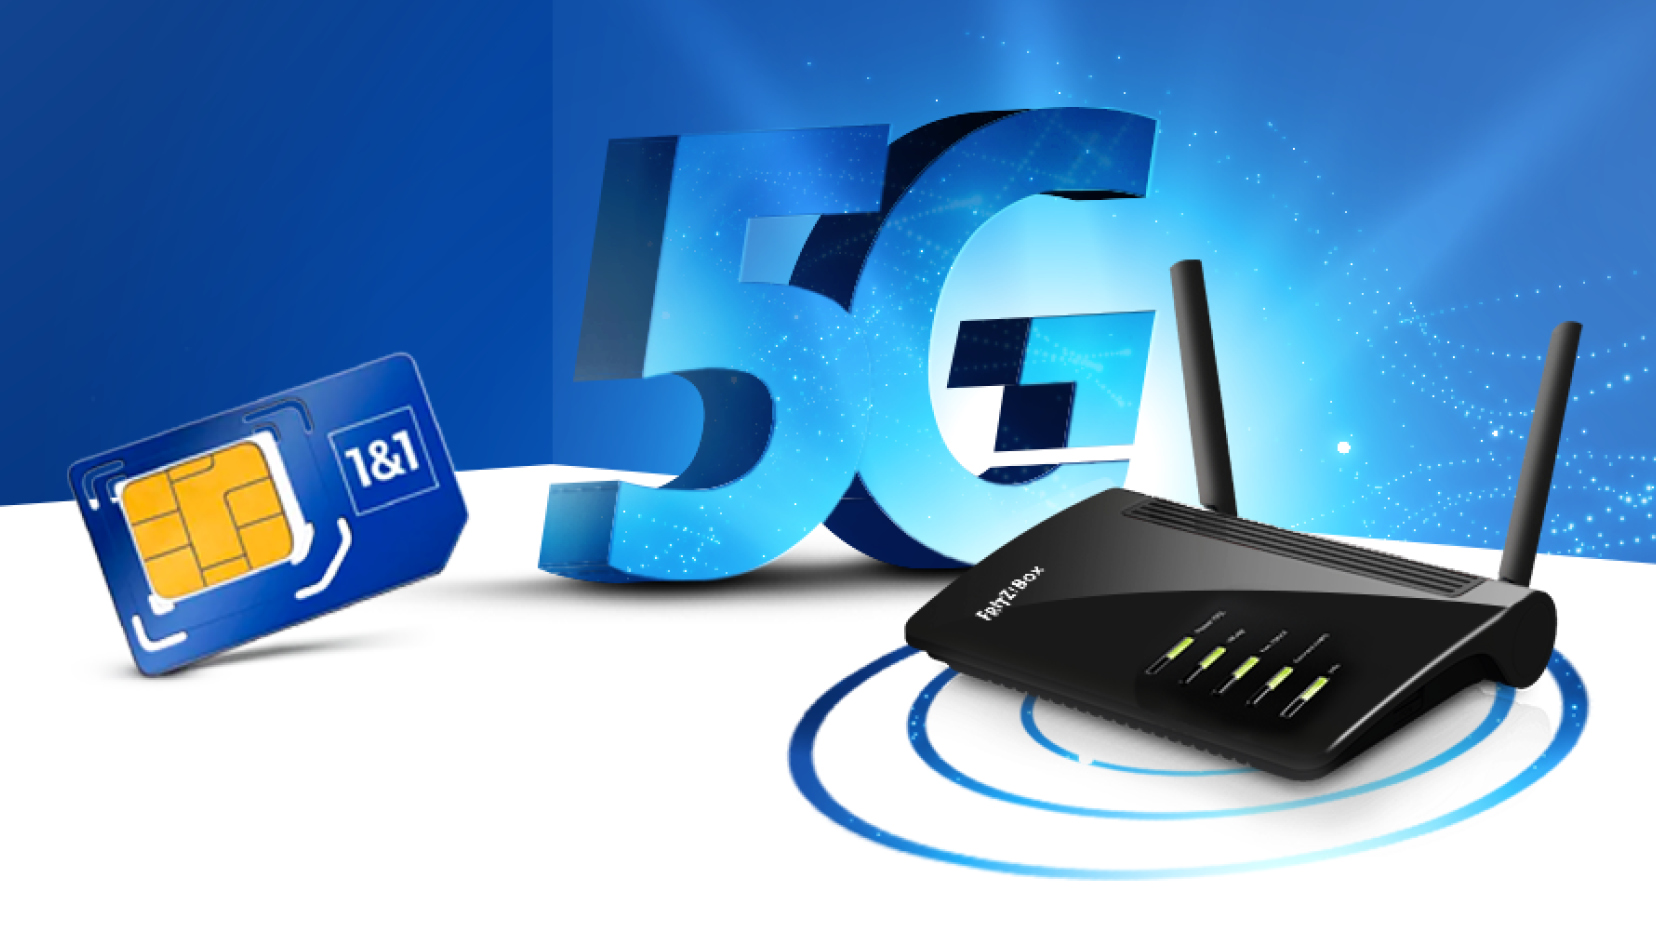 1&1 5G Netzausbau: Neue 1&1 Mobilfunktarife ab dem Dezember und 5G-Roaming